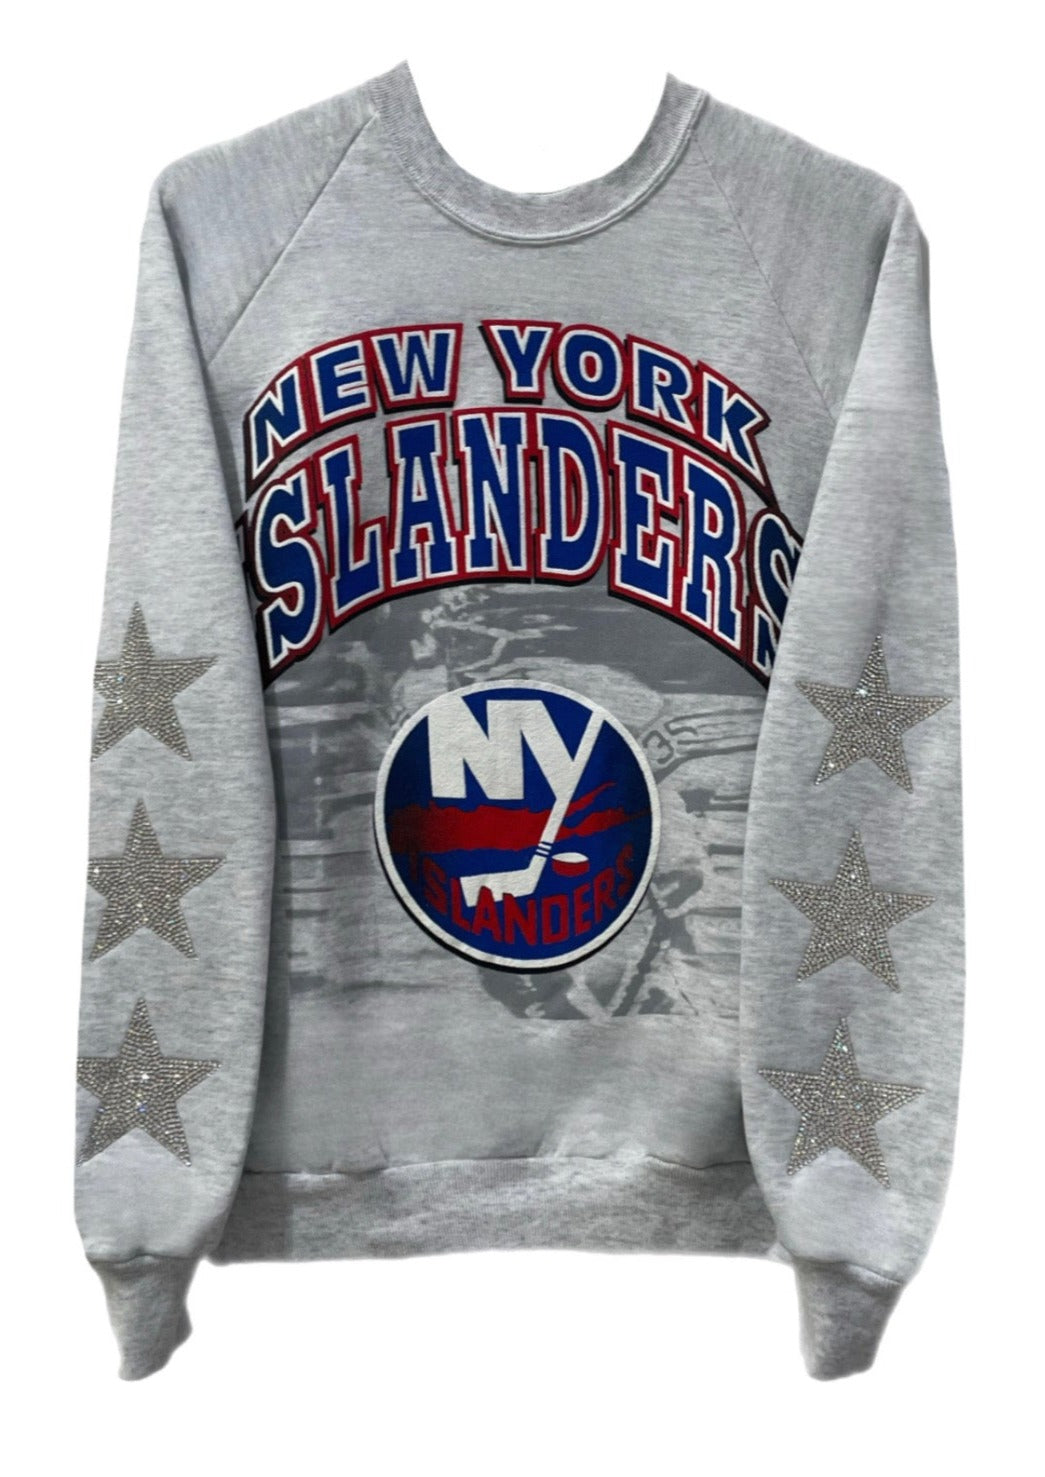 NY Islanders, NHL One of a KIND Vintage Sweatshirt with Three Crystal Star Design